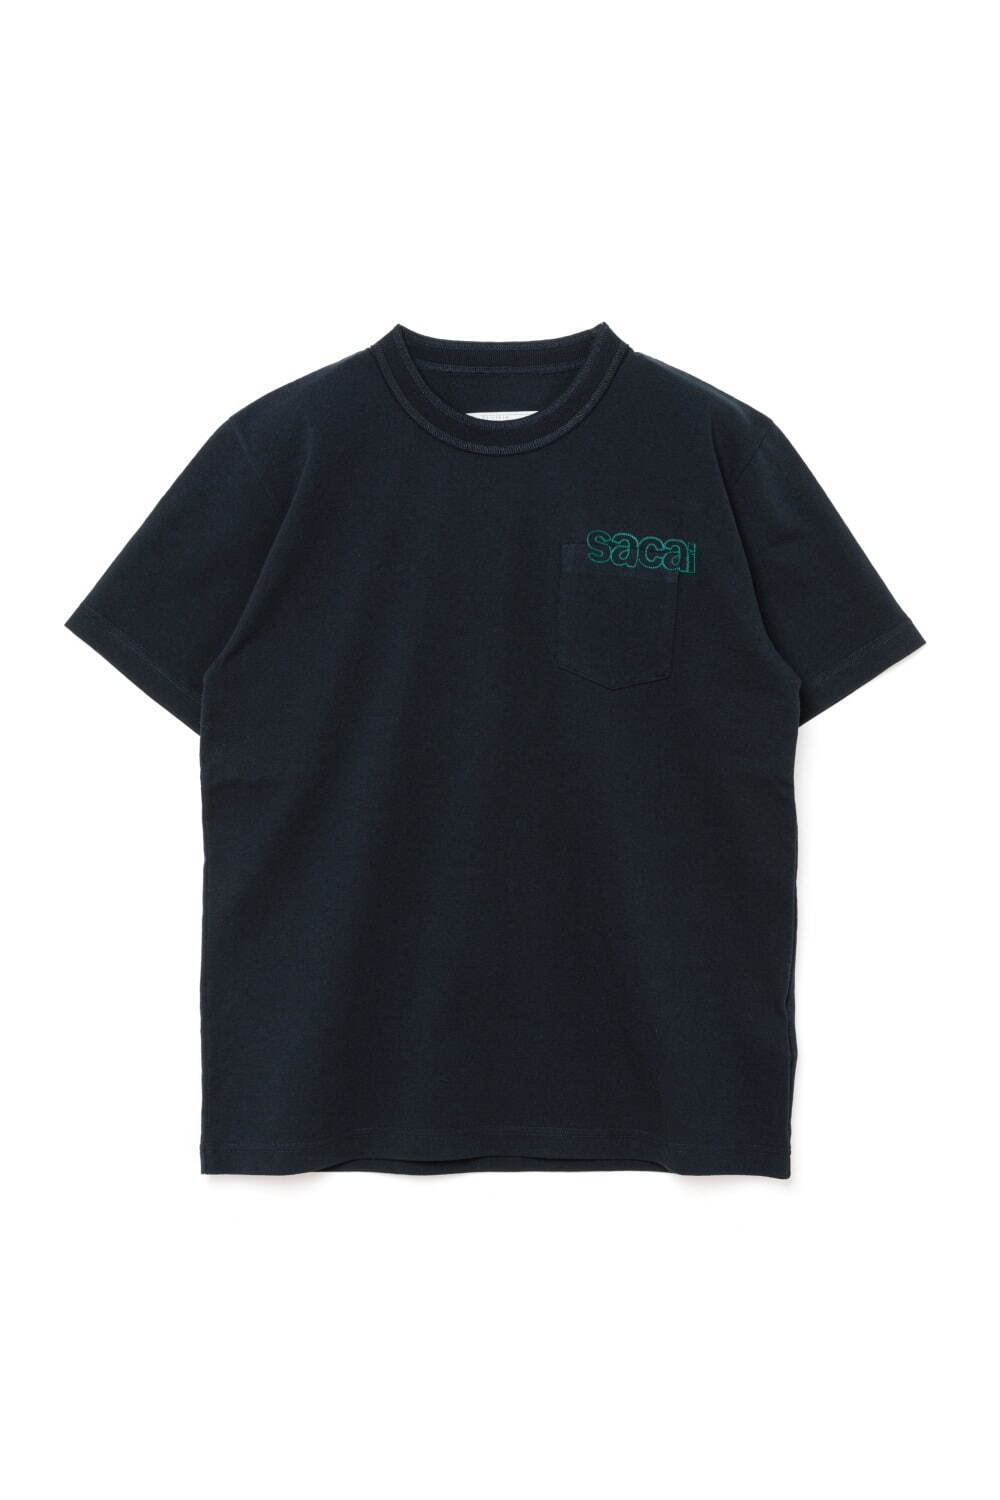 Tシャツ 18,700円